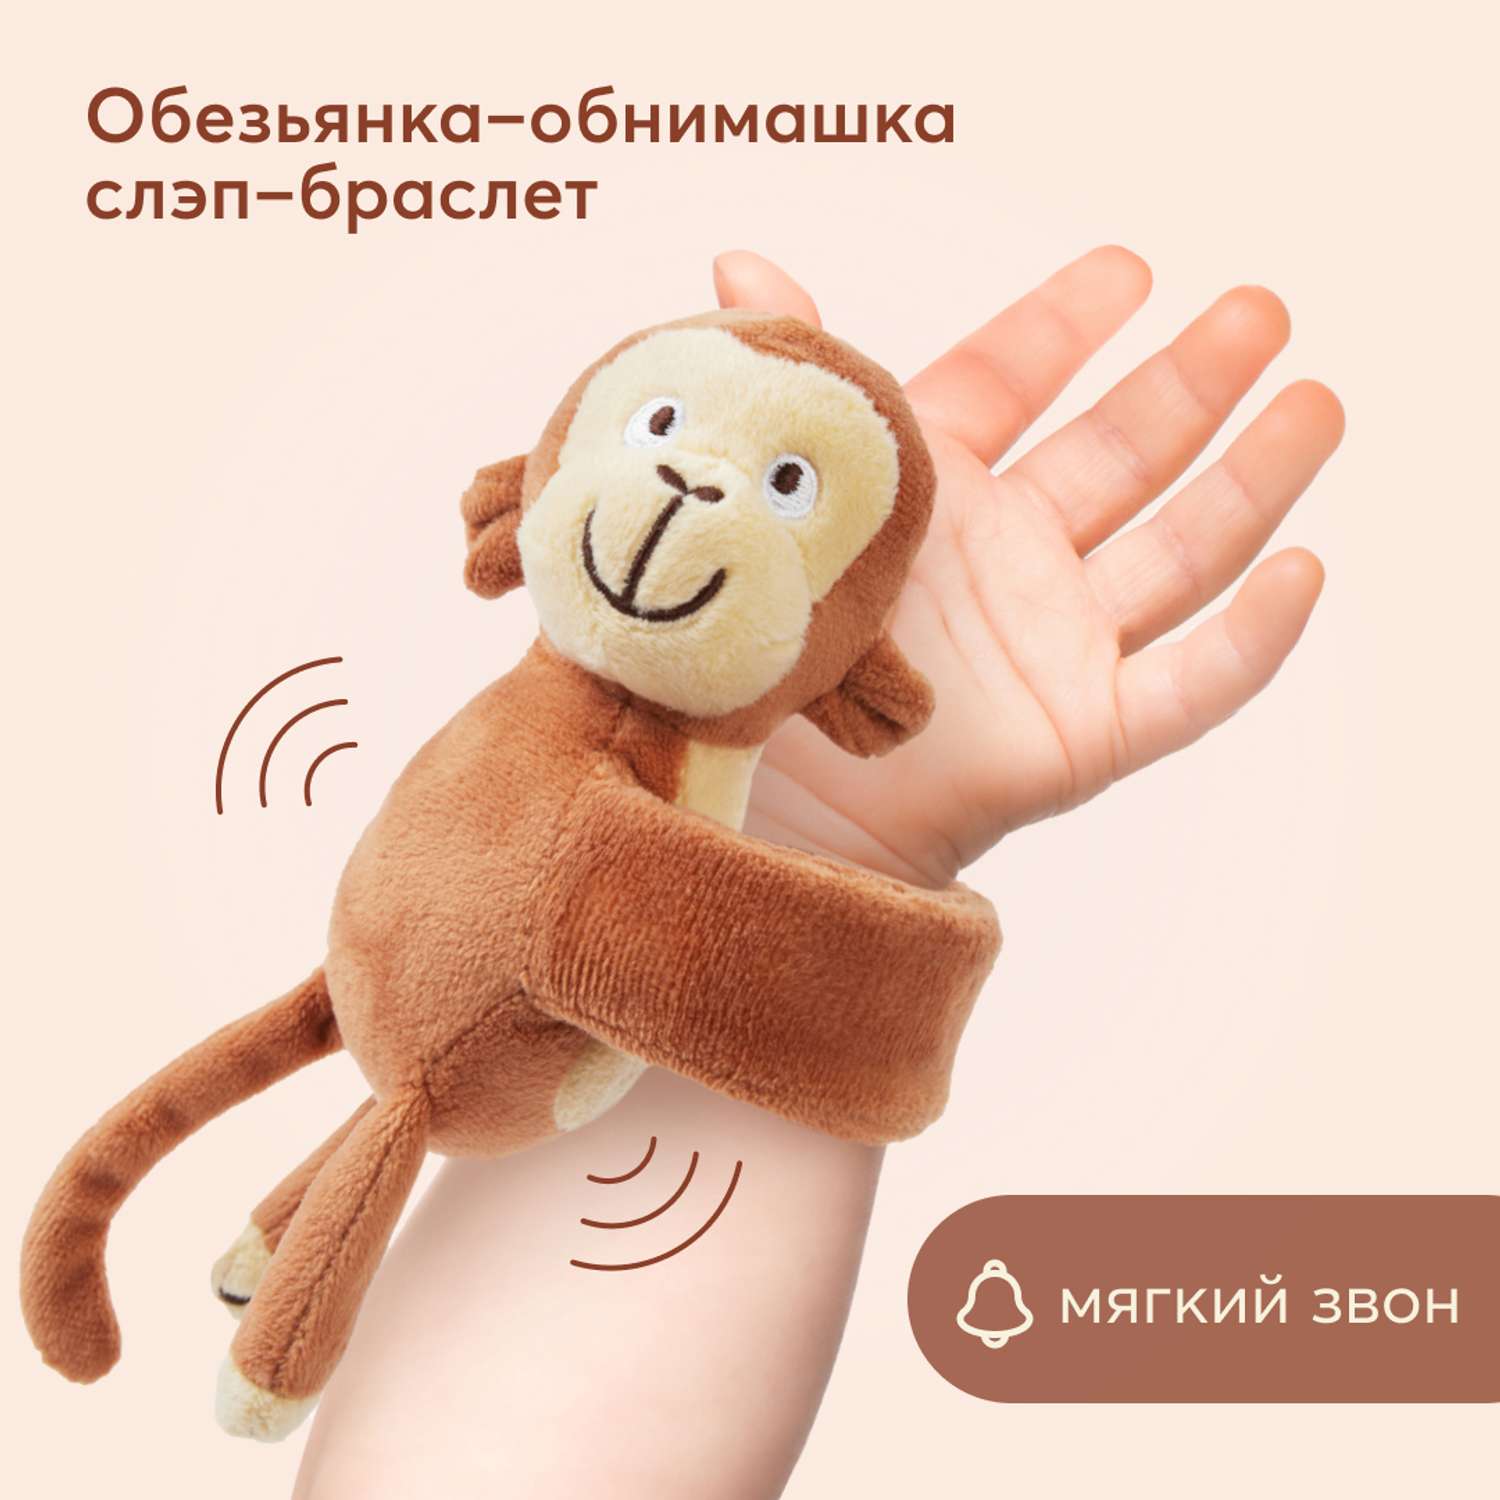 Погремушка-браслет Happy Baby игрушка коричневая обезьянка - фото 1